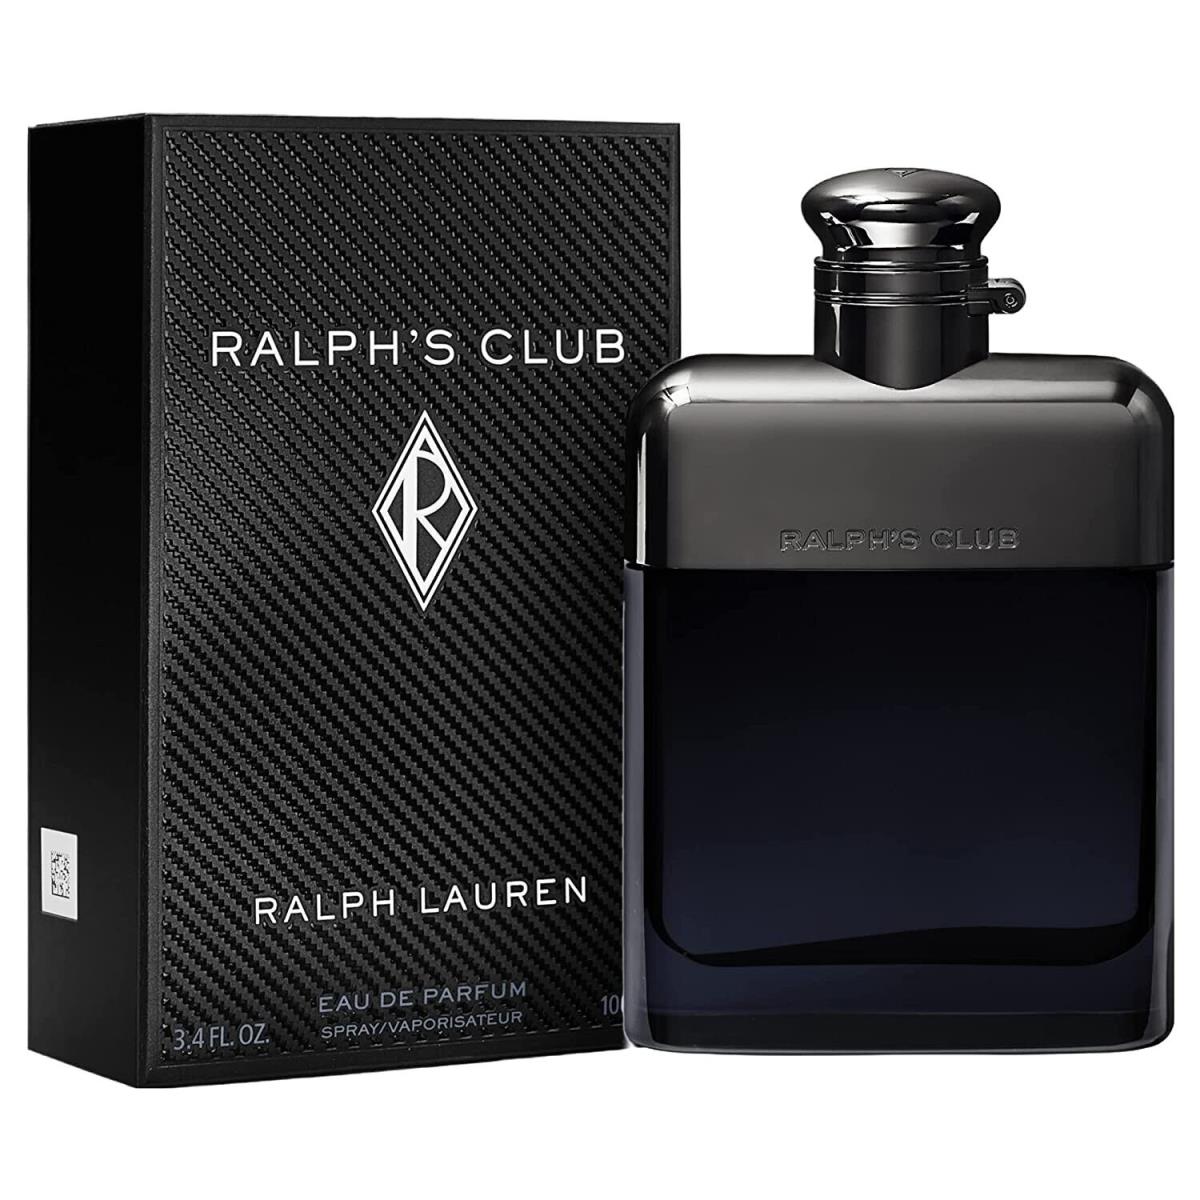 Ralph`s Club by Ralph Lauren Eau De Parfum Spray 3.4 oz Men